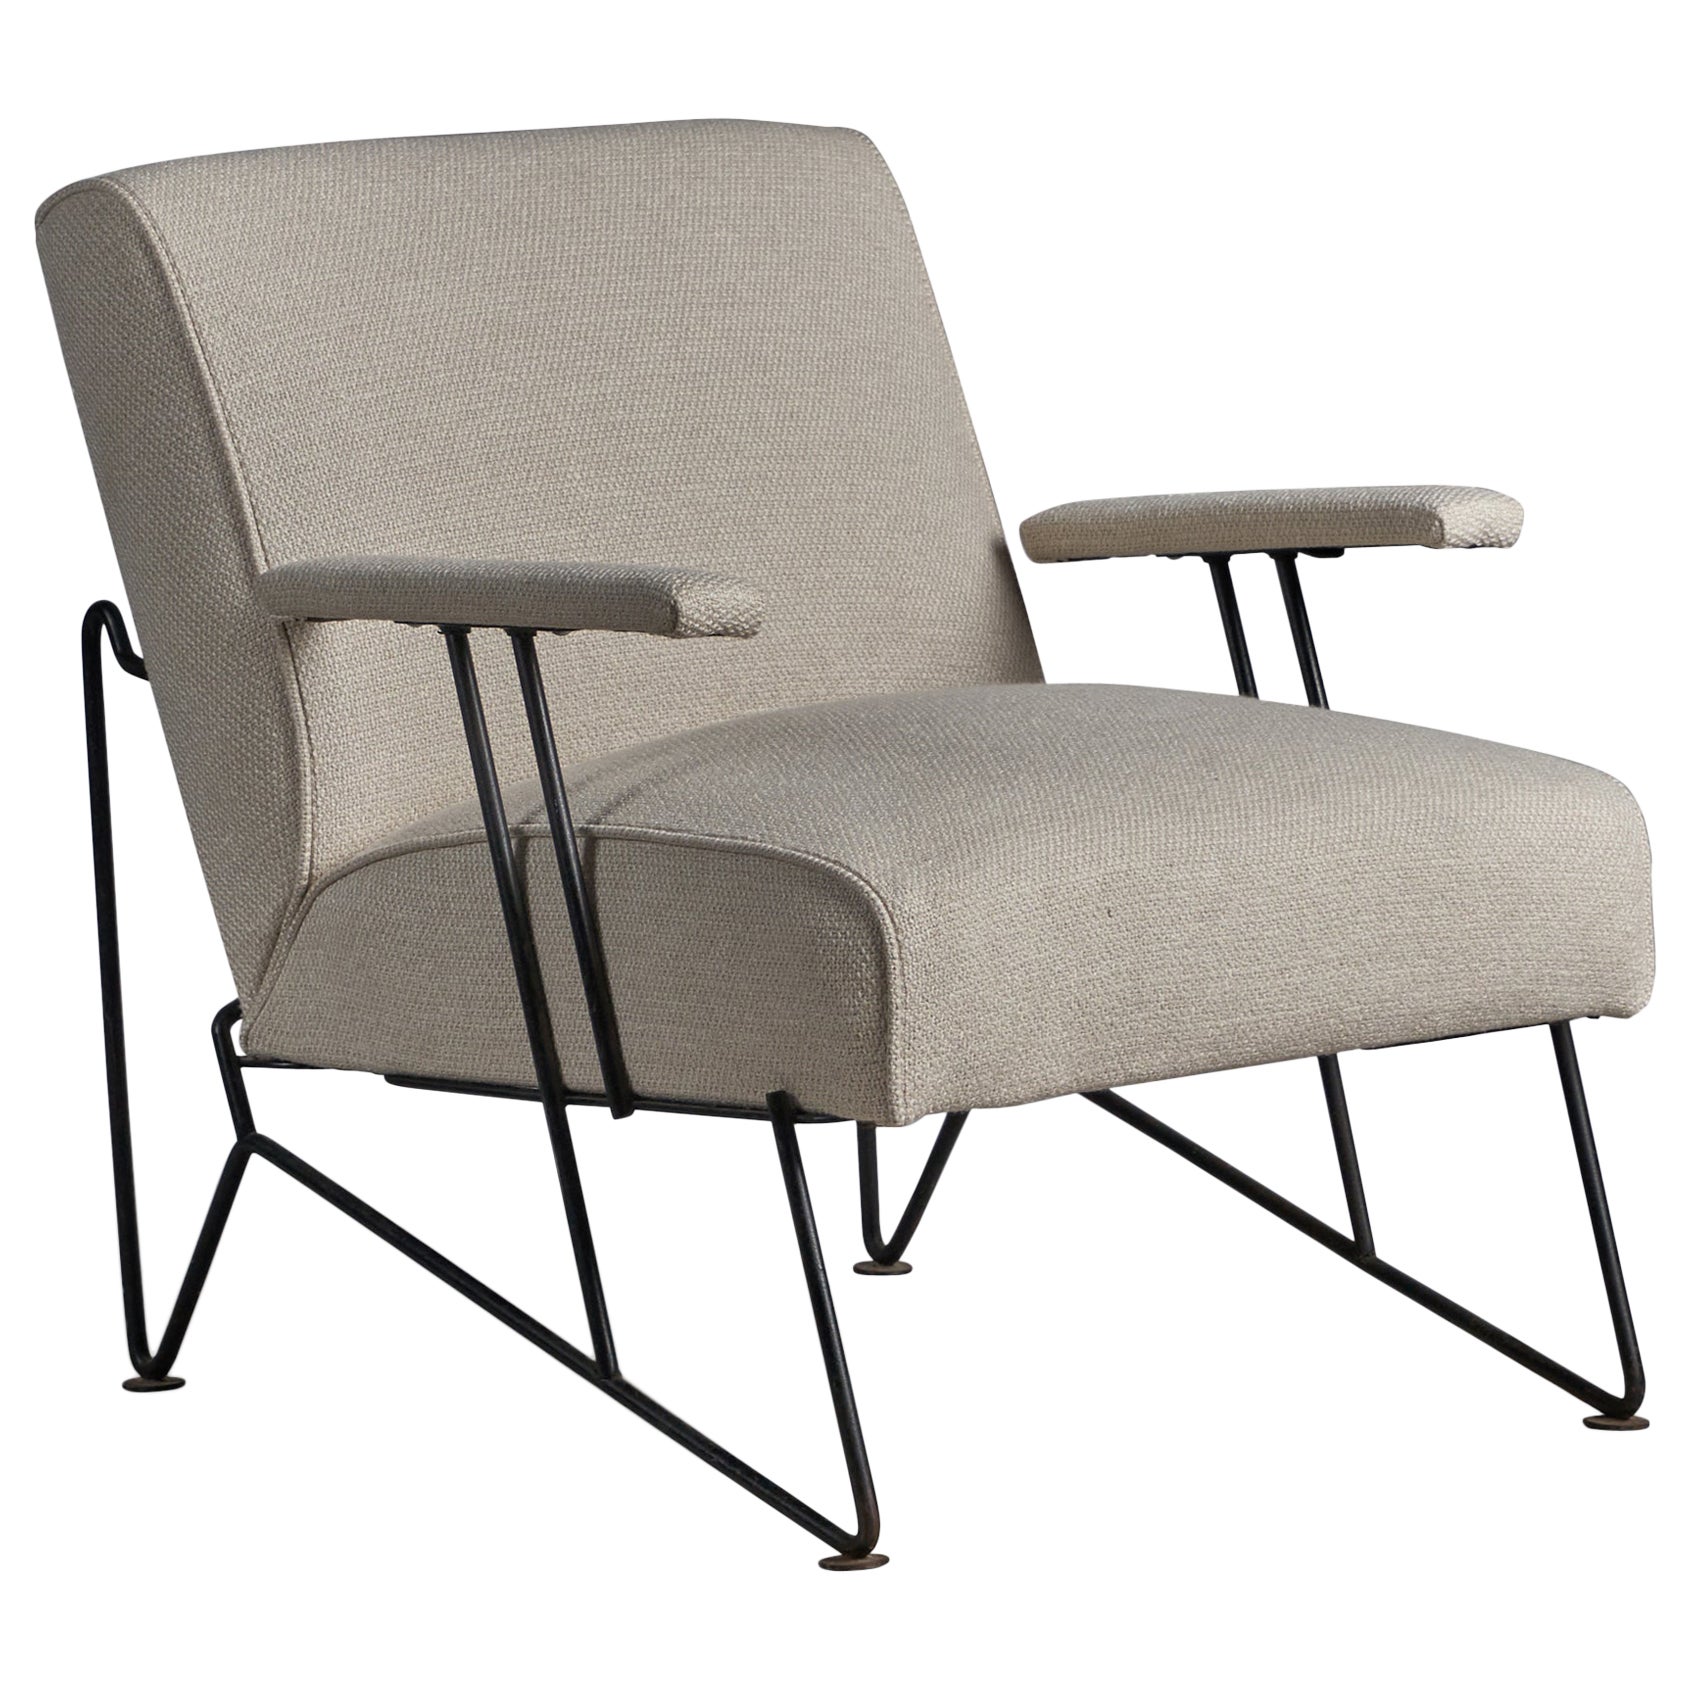 Dan Johnson, Lounge Chair, Iron, Fabric, USA, 1950s For Sale